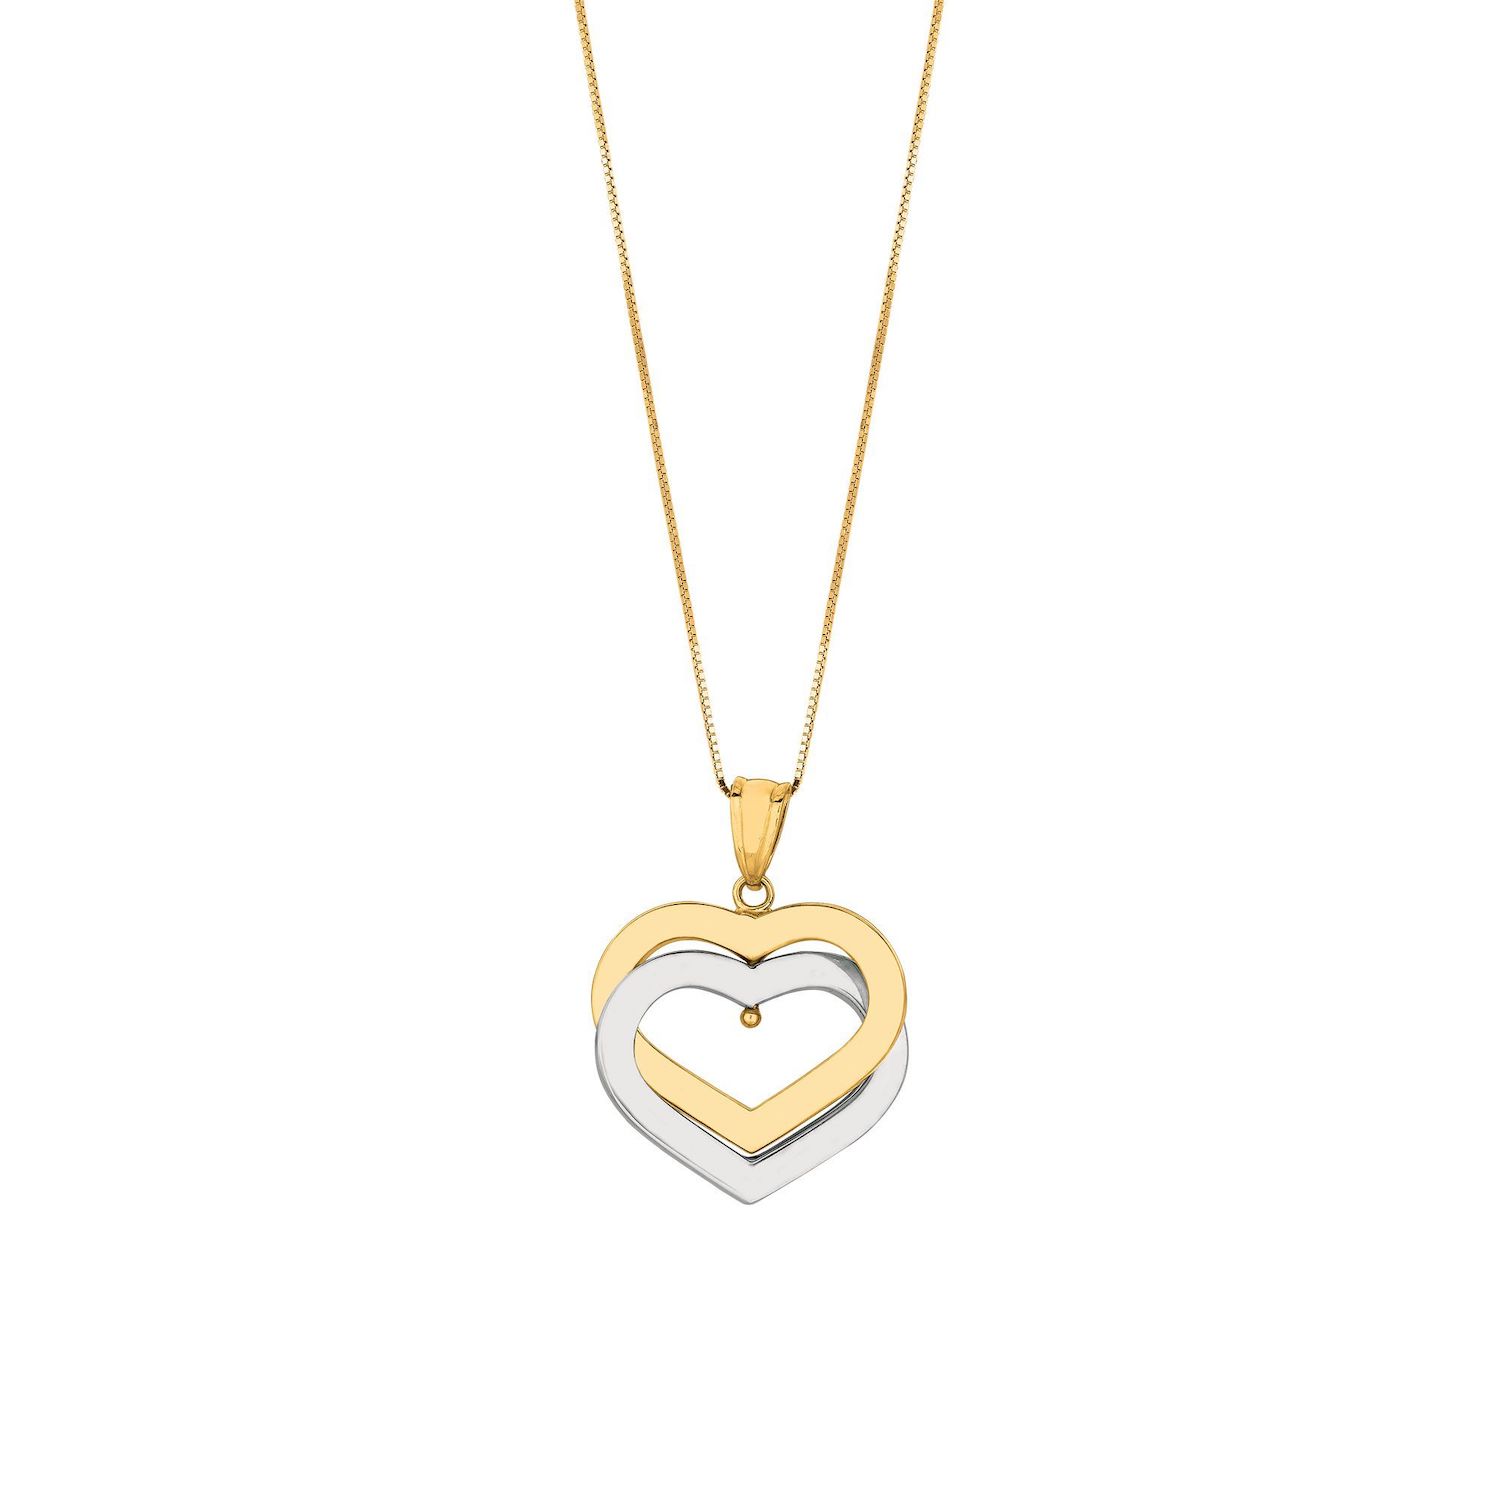 14K Gold Yellow White Two-Tone Interlocking Hearts Pendant Chain Necklace 18"